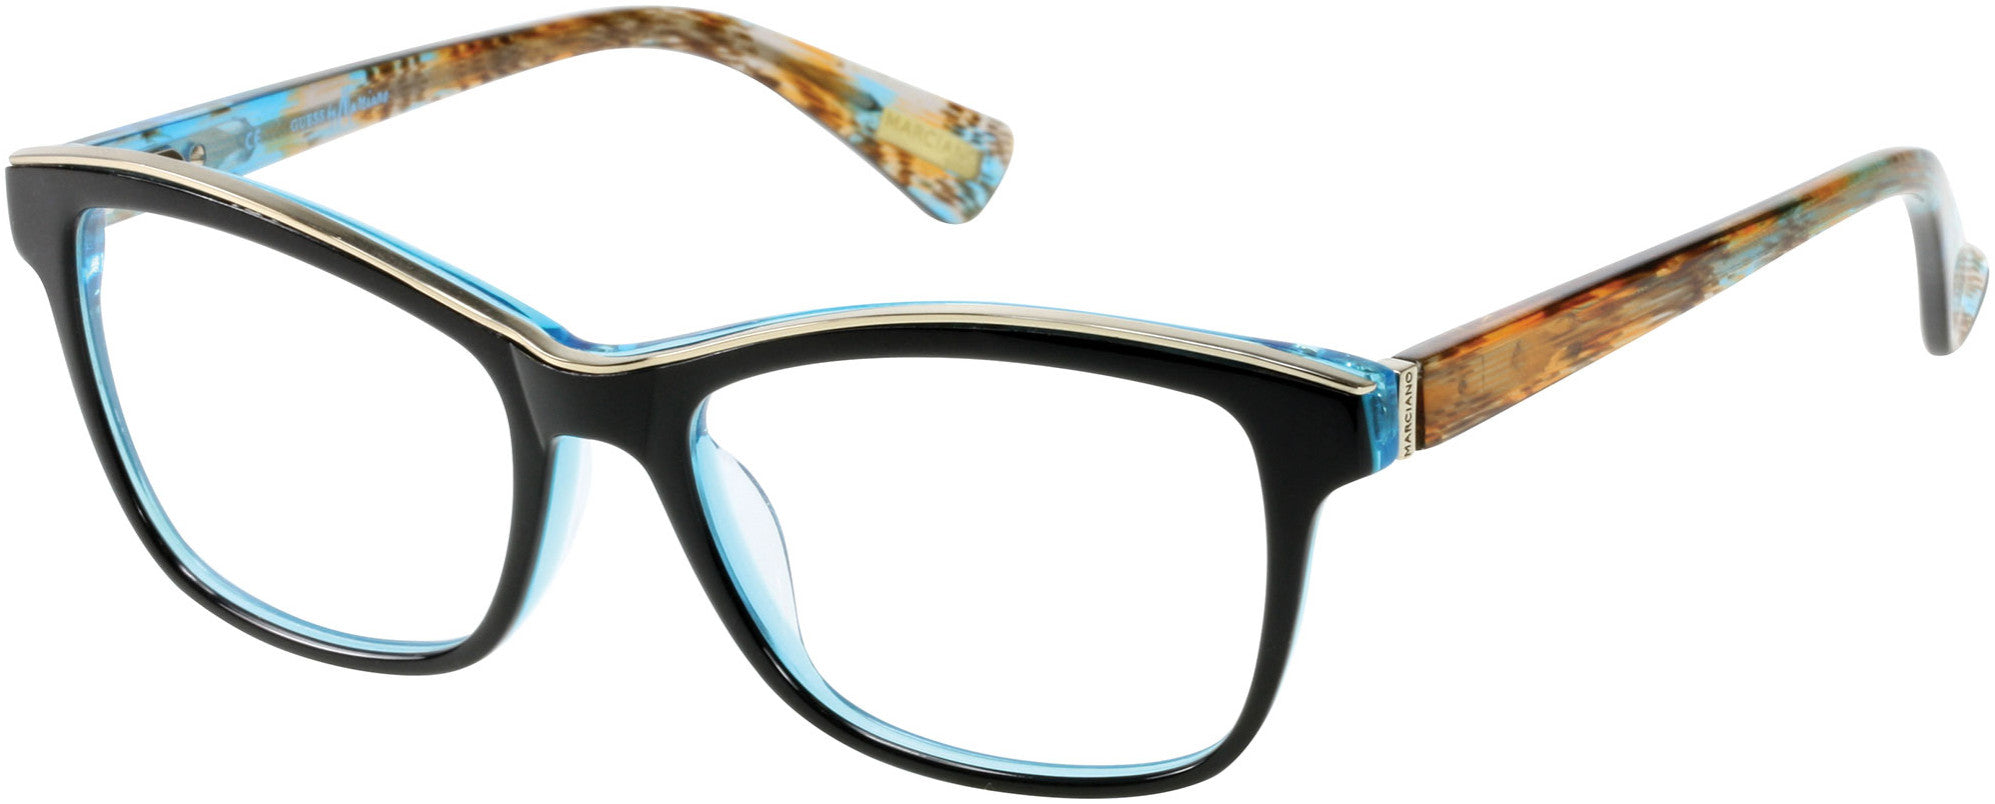 Guess By Marciano GM0246 Eyeglasses B24-B24 - Blue